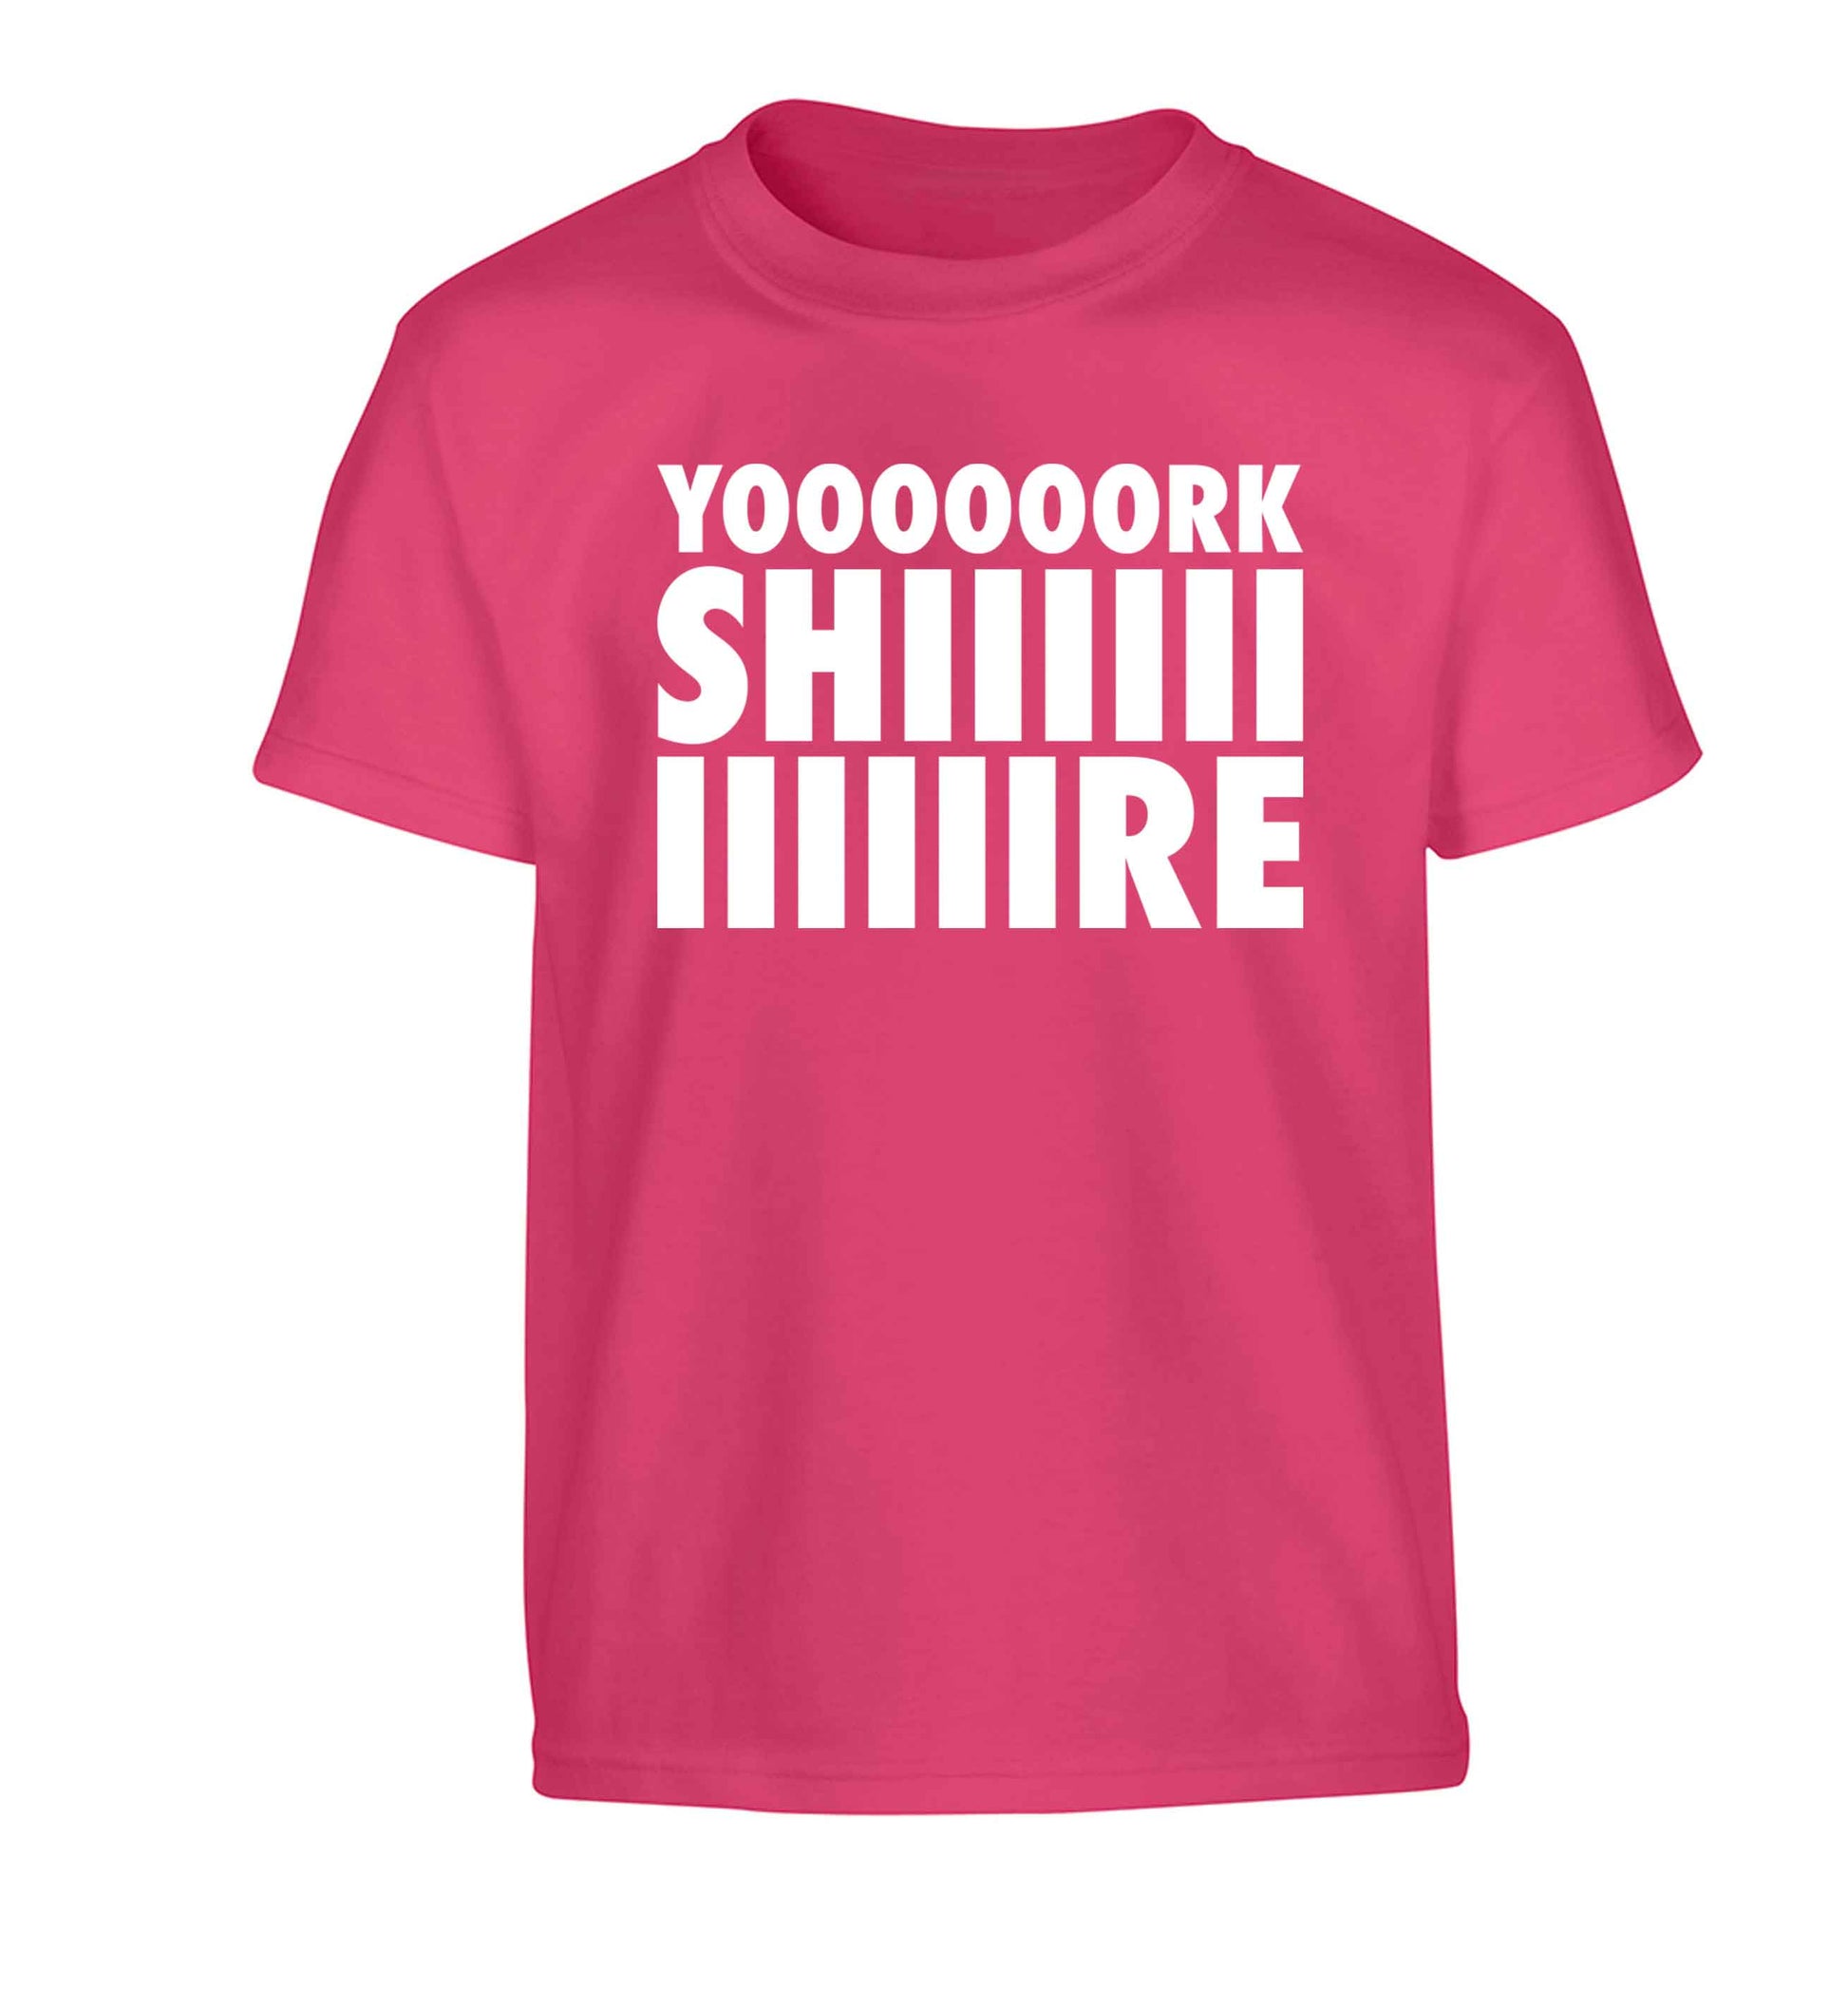 Yoooorkshiiiiire Children's pink Tshirt 12-13 Years